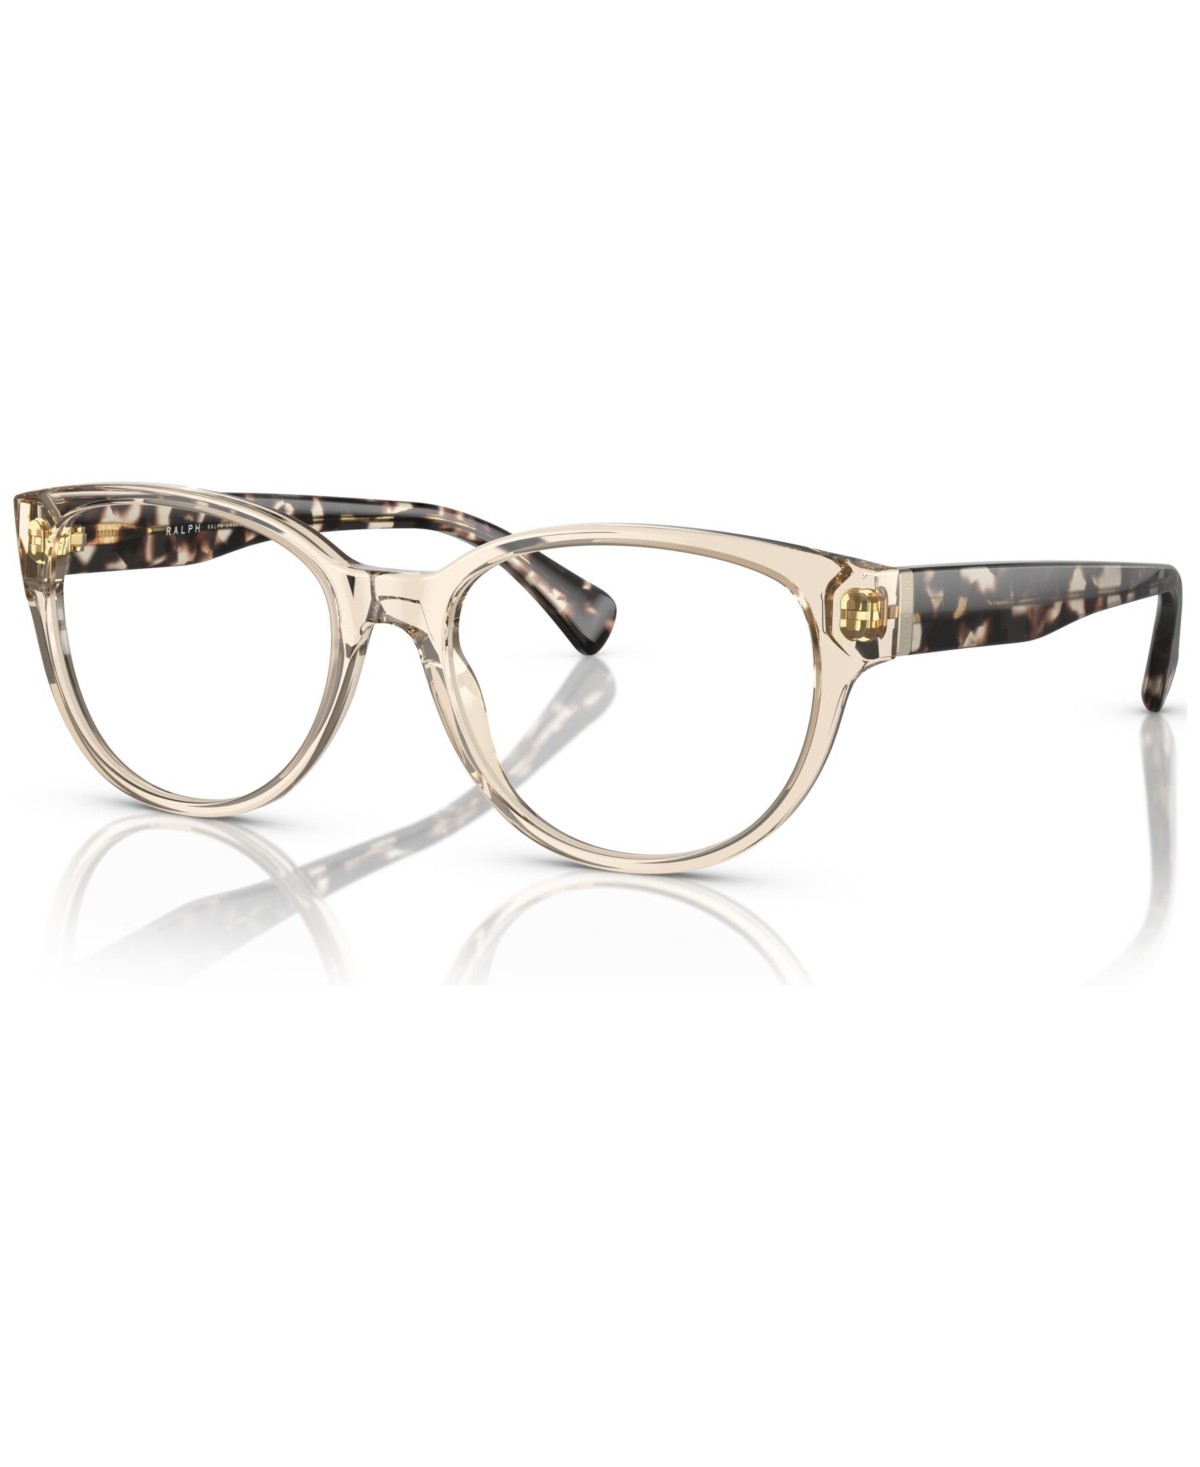 Women's Oval Eyeglasses, RA7151 54 - Shiny Transparent Light Brown